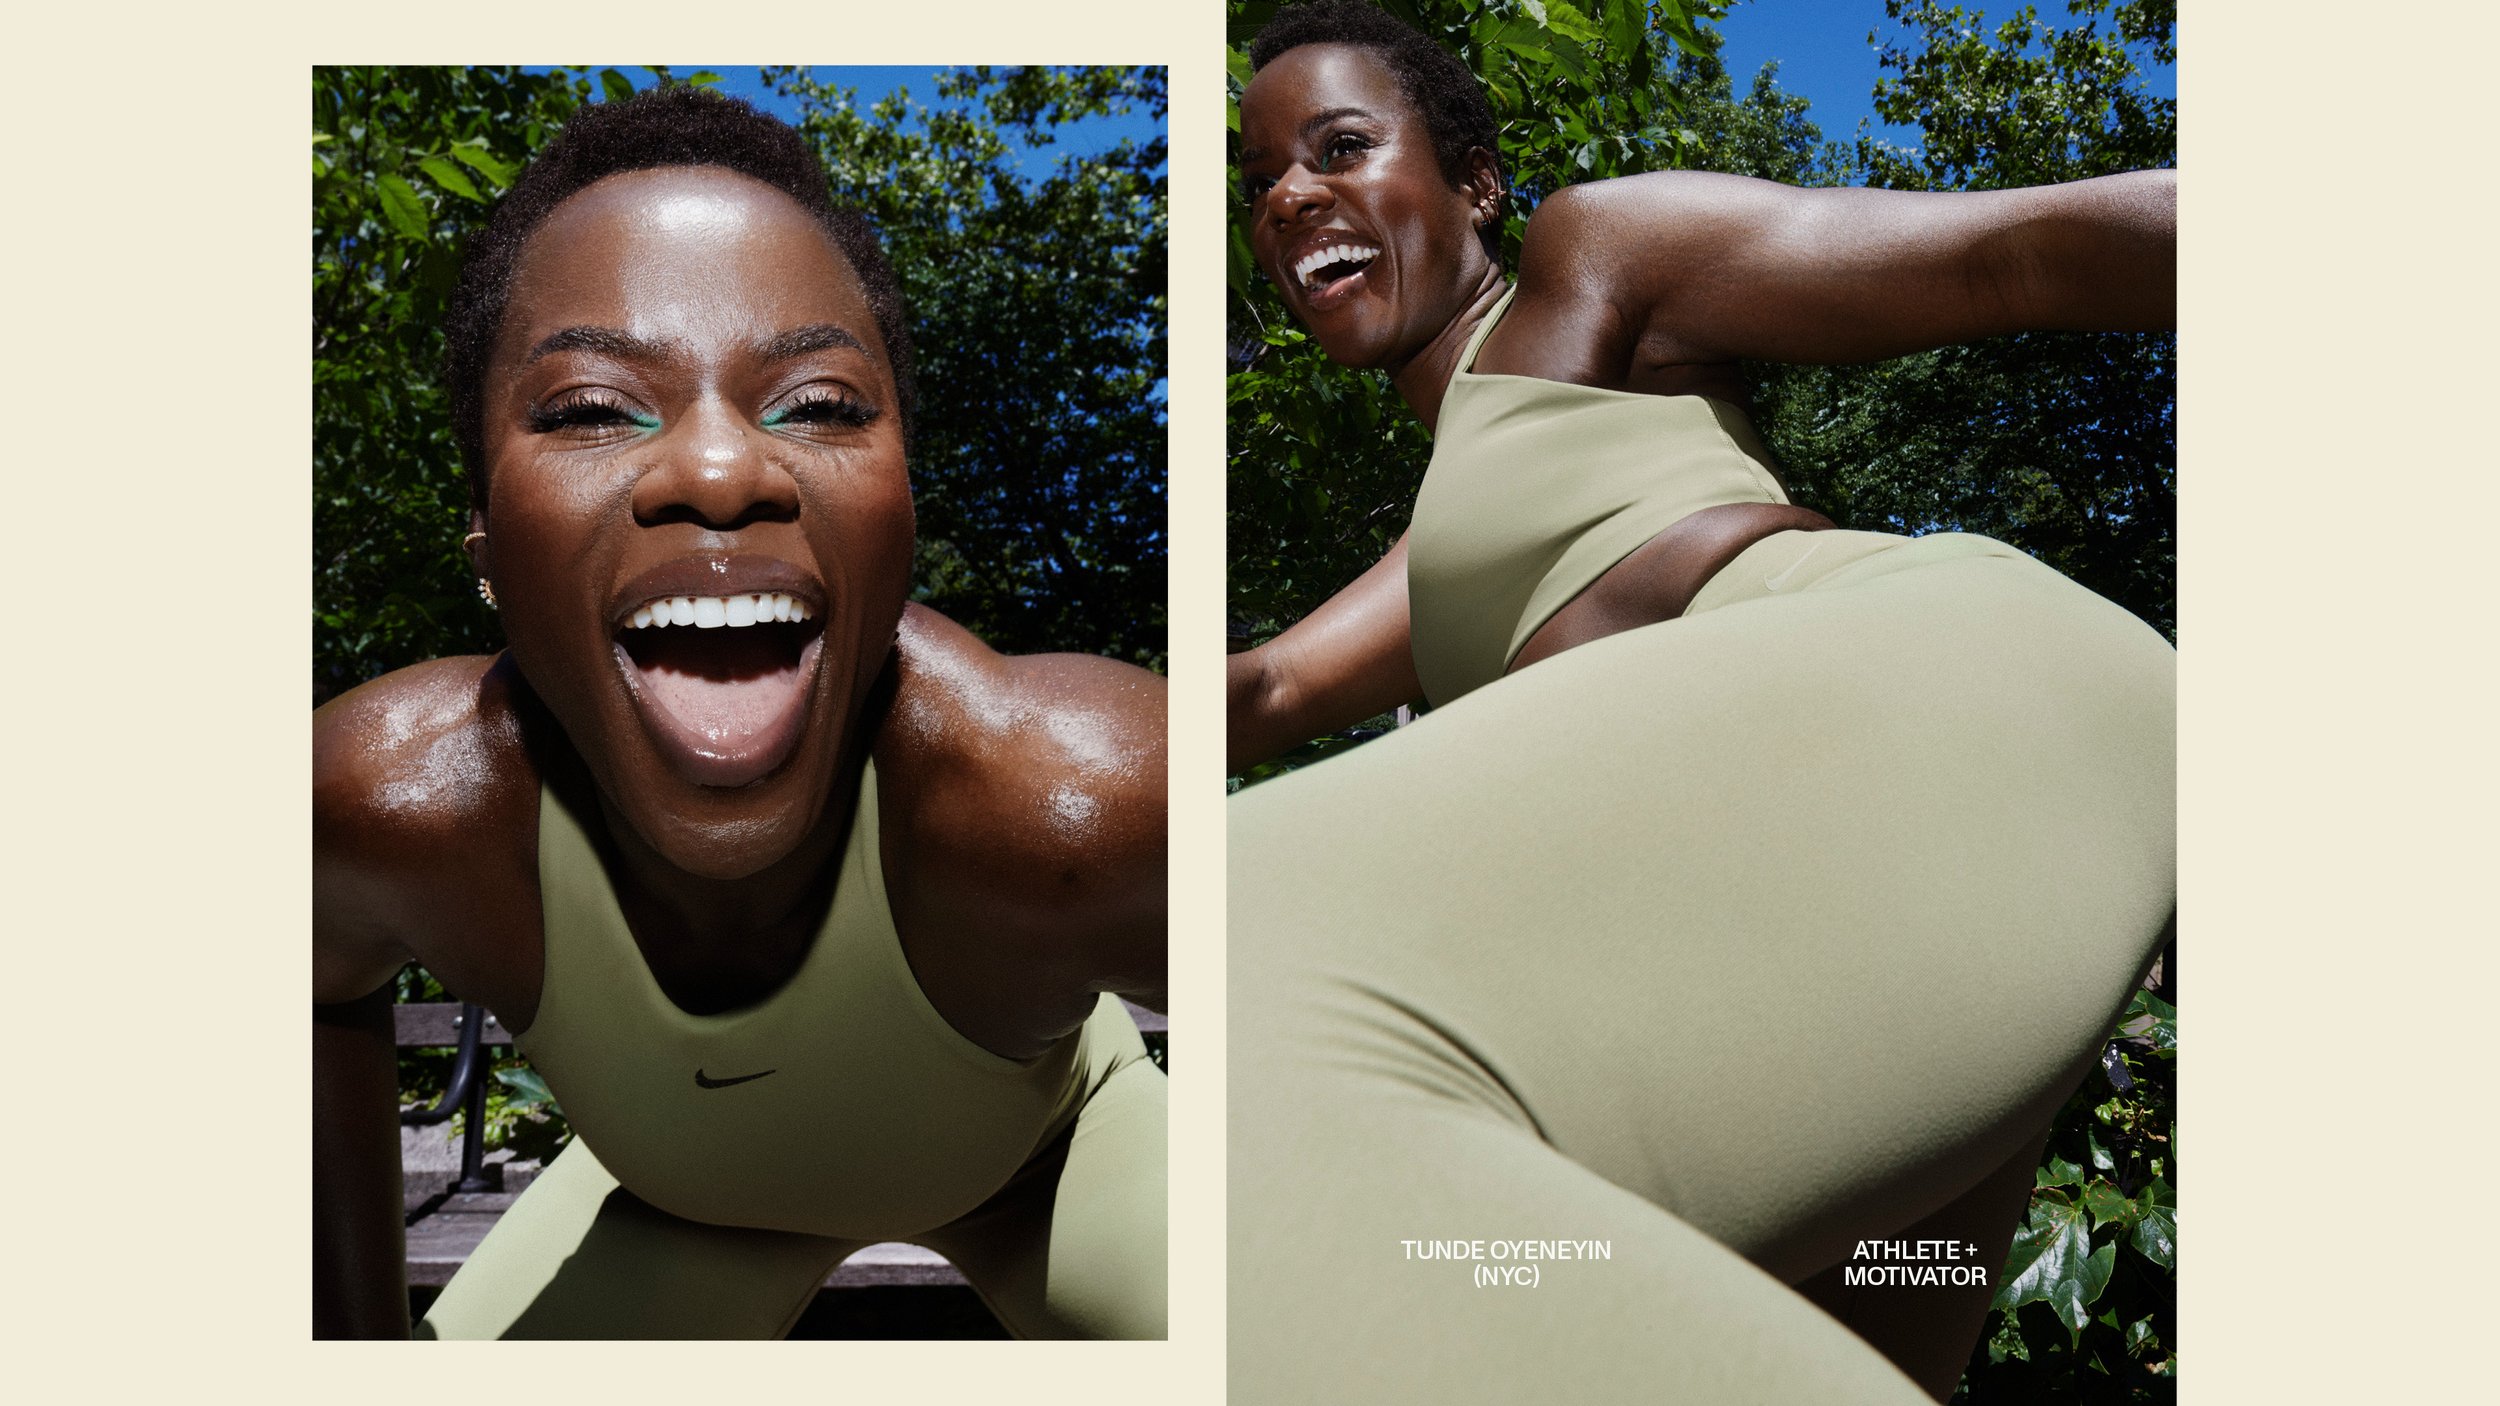 Nike Leggings Campaign — Diana Albrecht